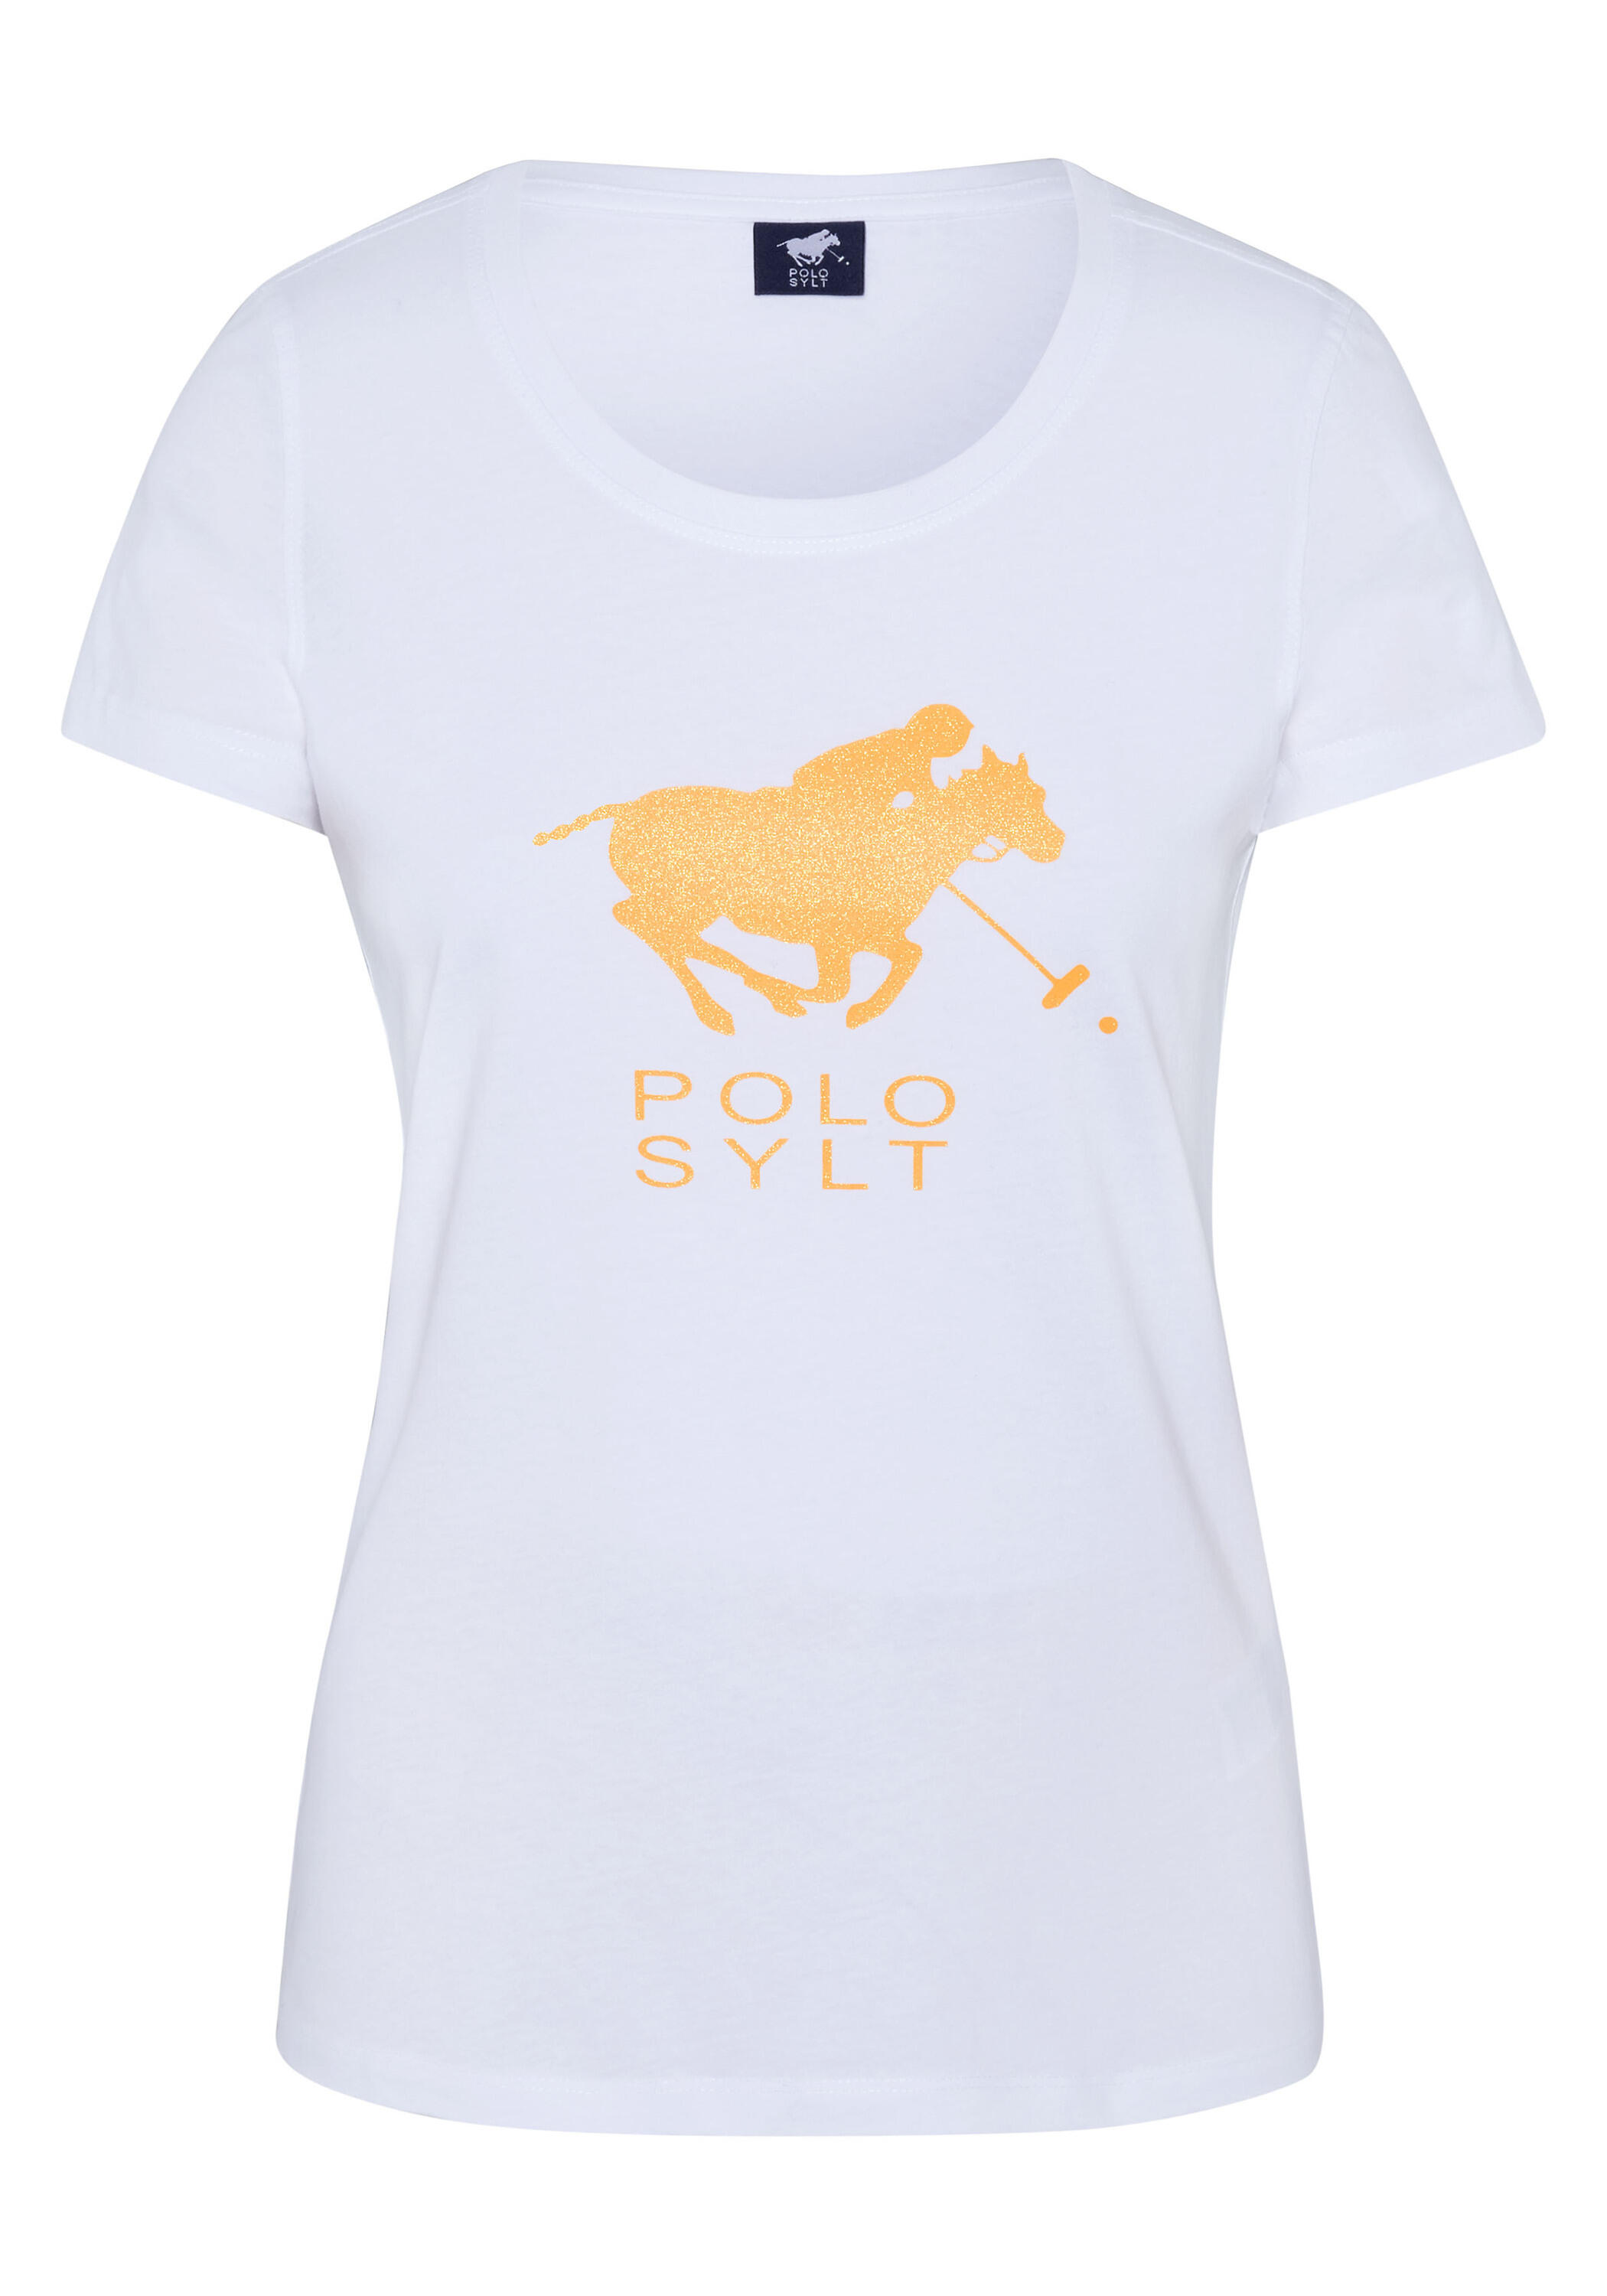 POLO SYLT T-Shirt in figurbetonter Passform